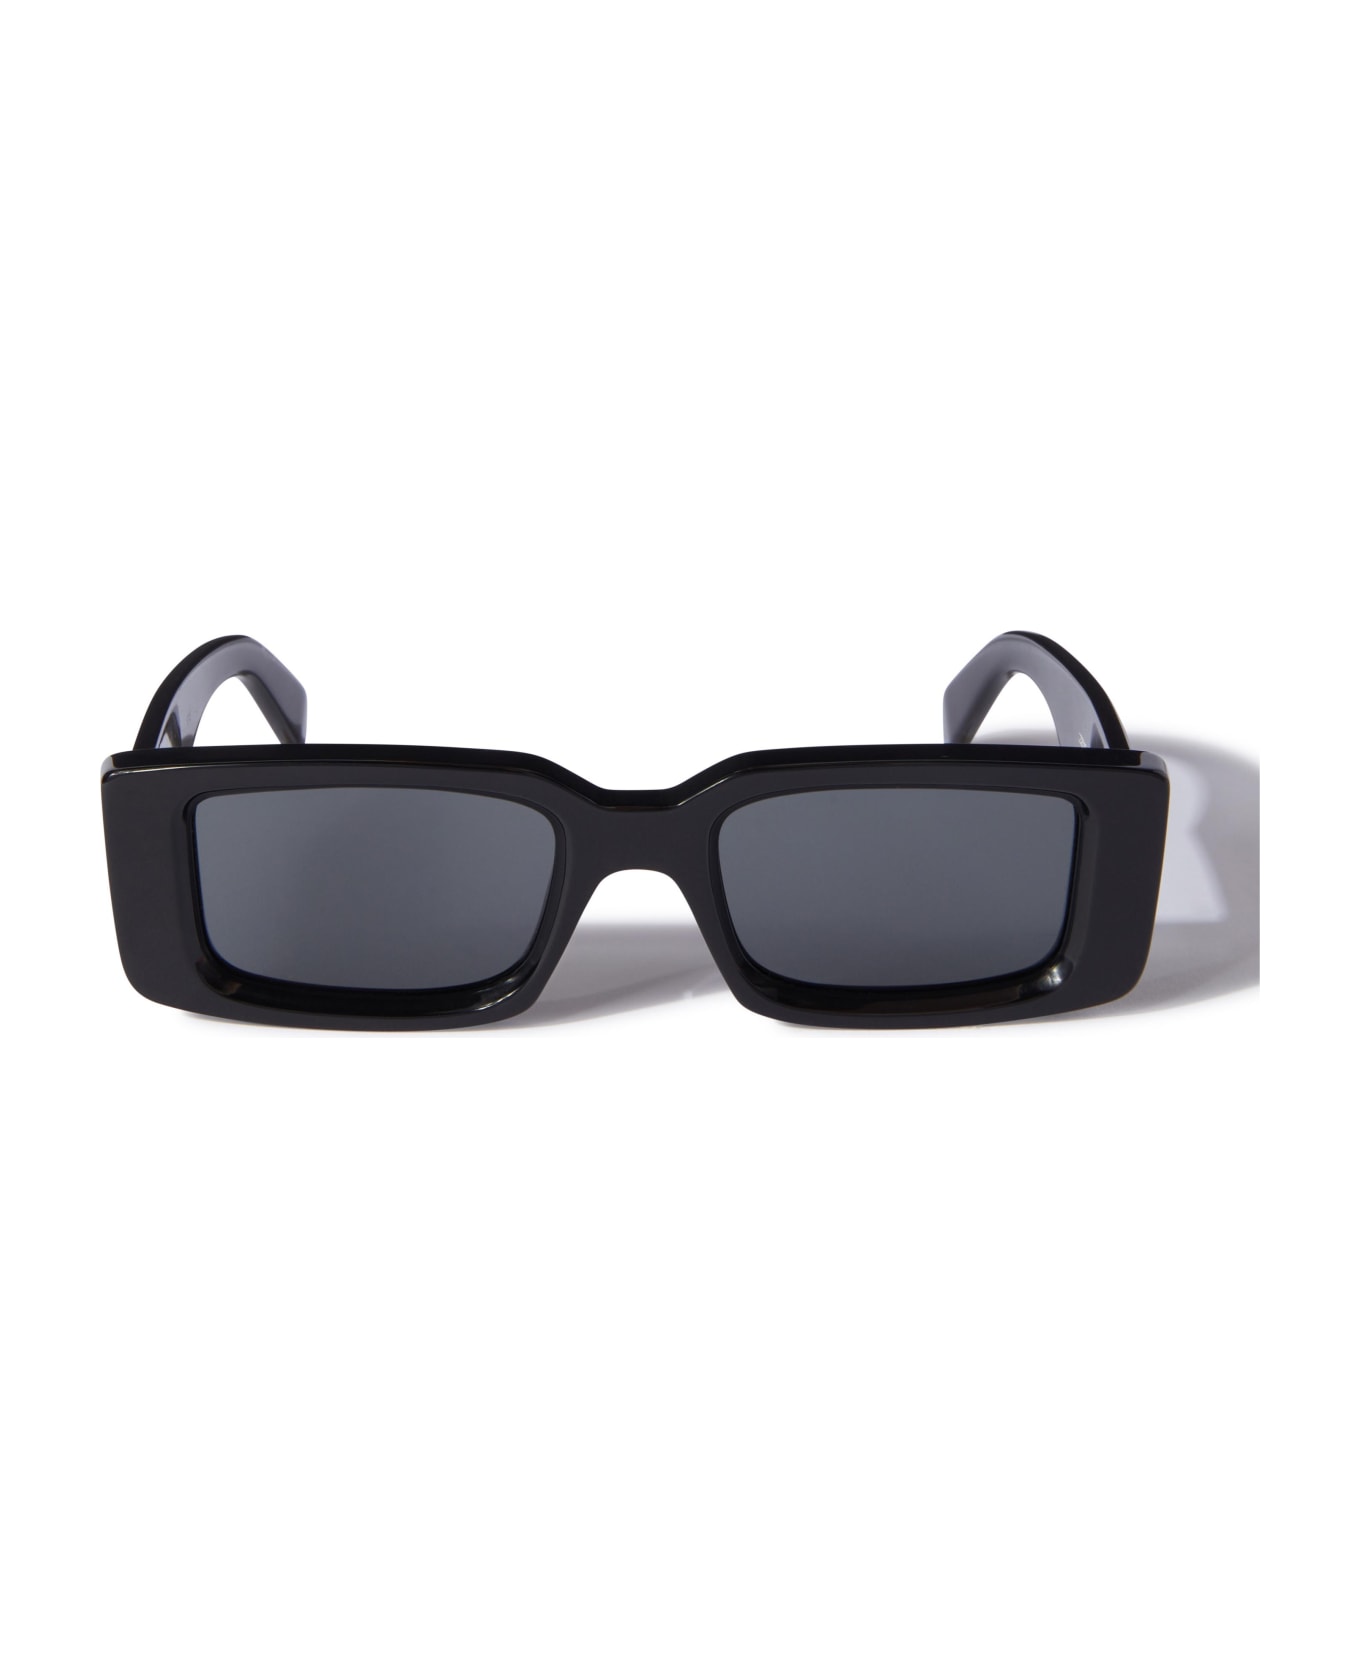 Off-White Sunglasses - Nero/Nero サングラス